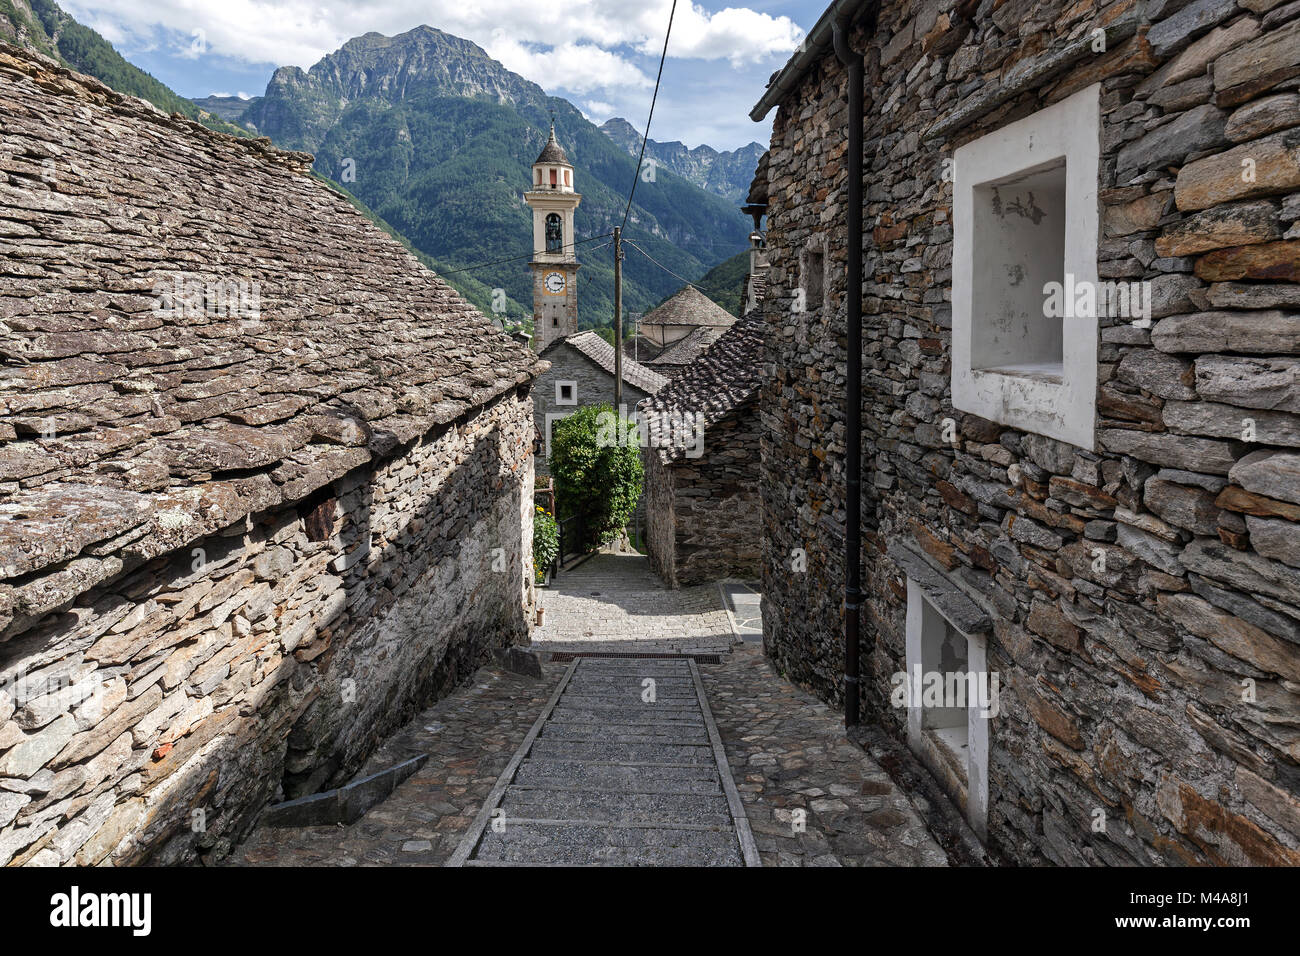 Typical Ticino stone houses and church in the village of Sonogno,Verzasca Valley,Valle Verzasca,Canton Ticino,Switzerland Stock Photo